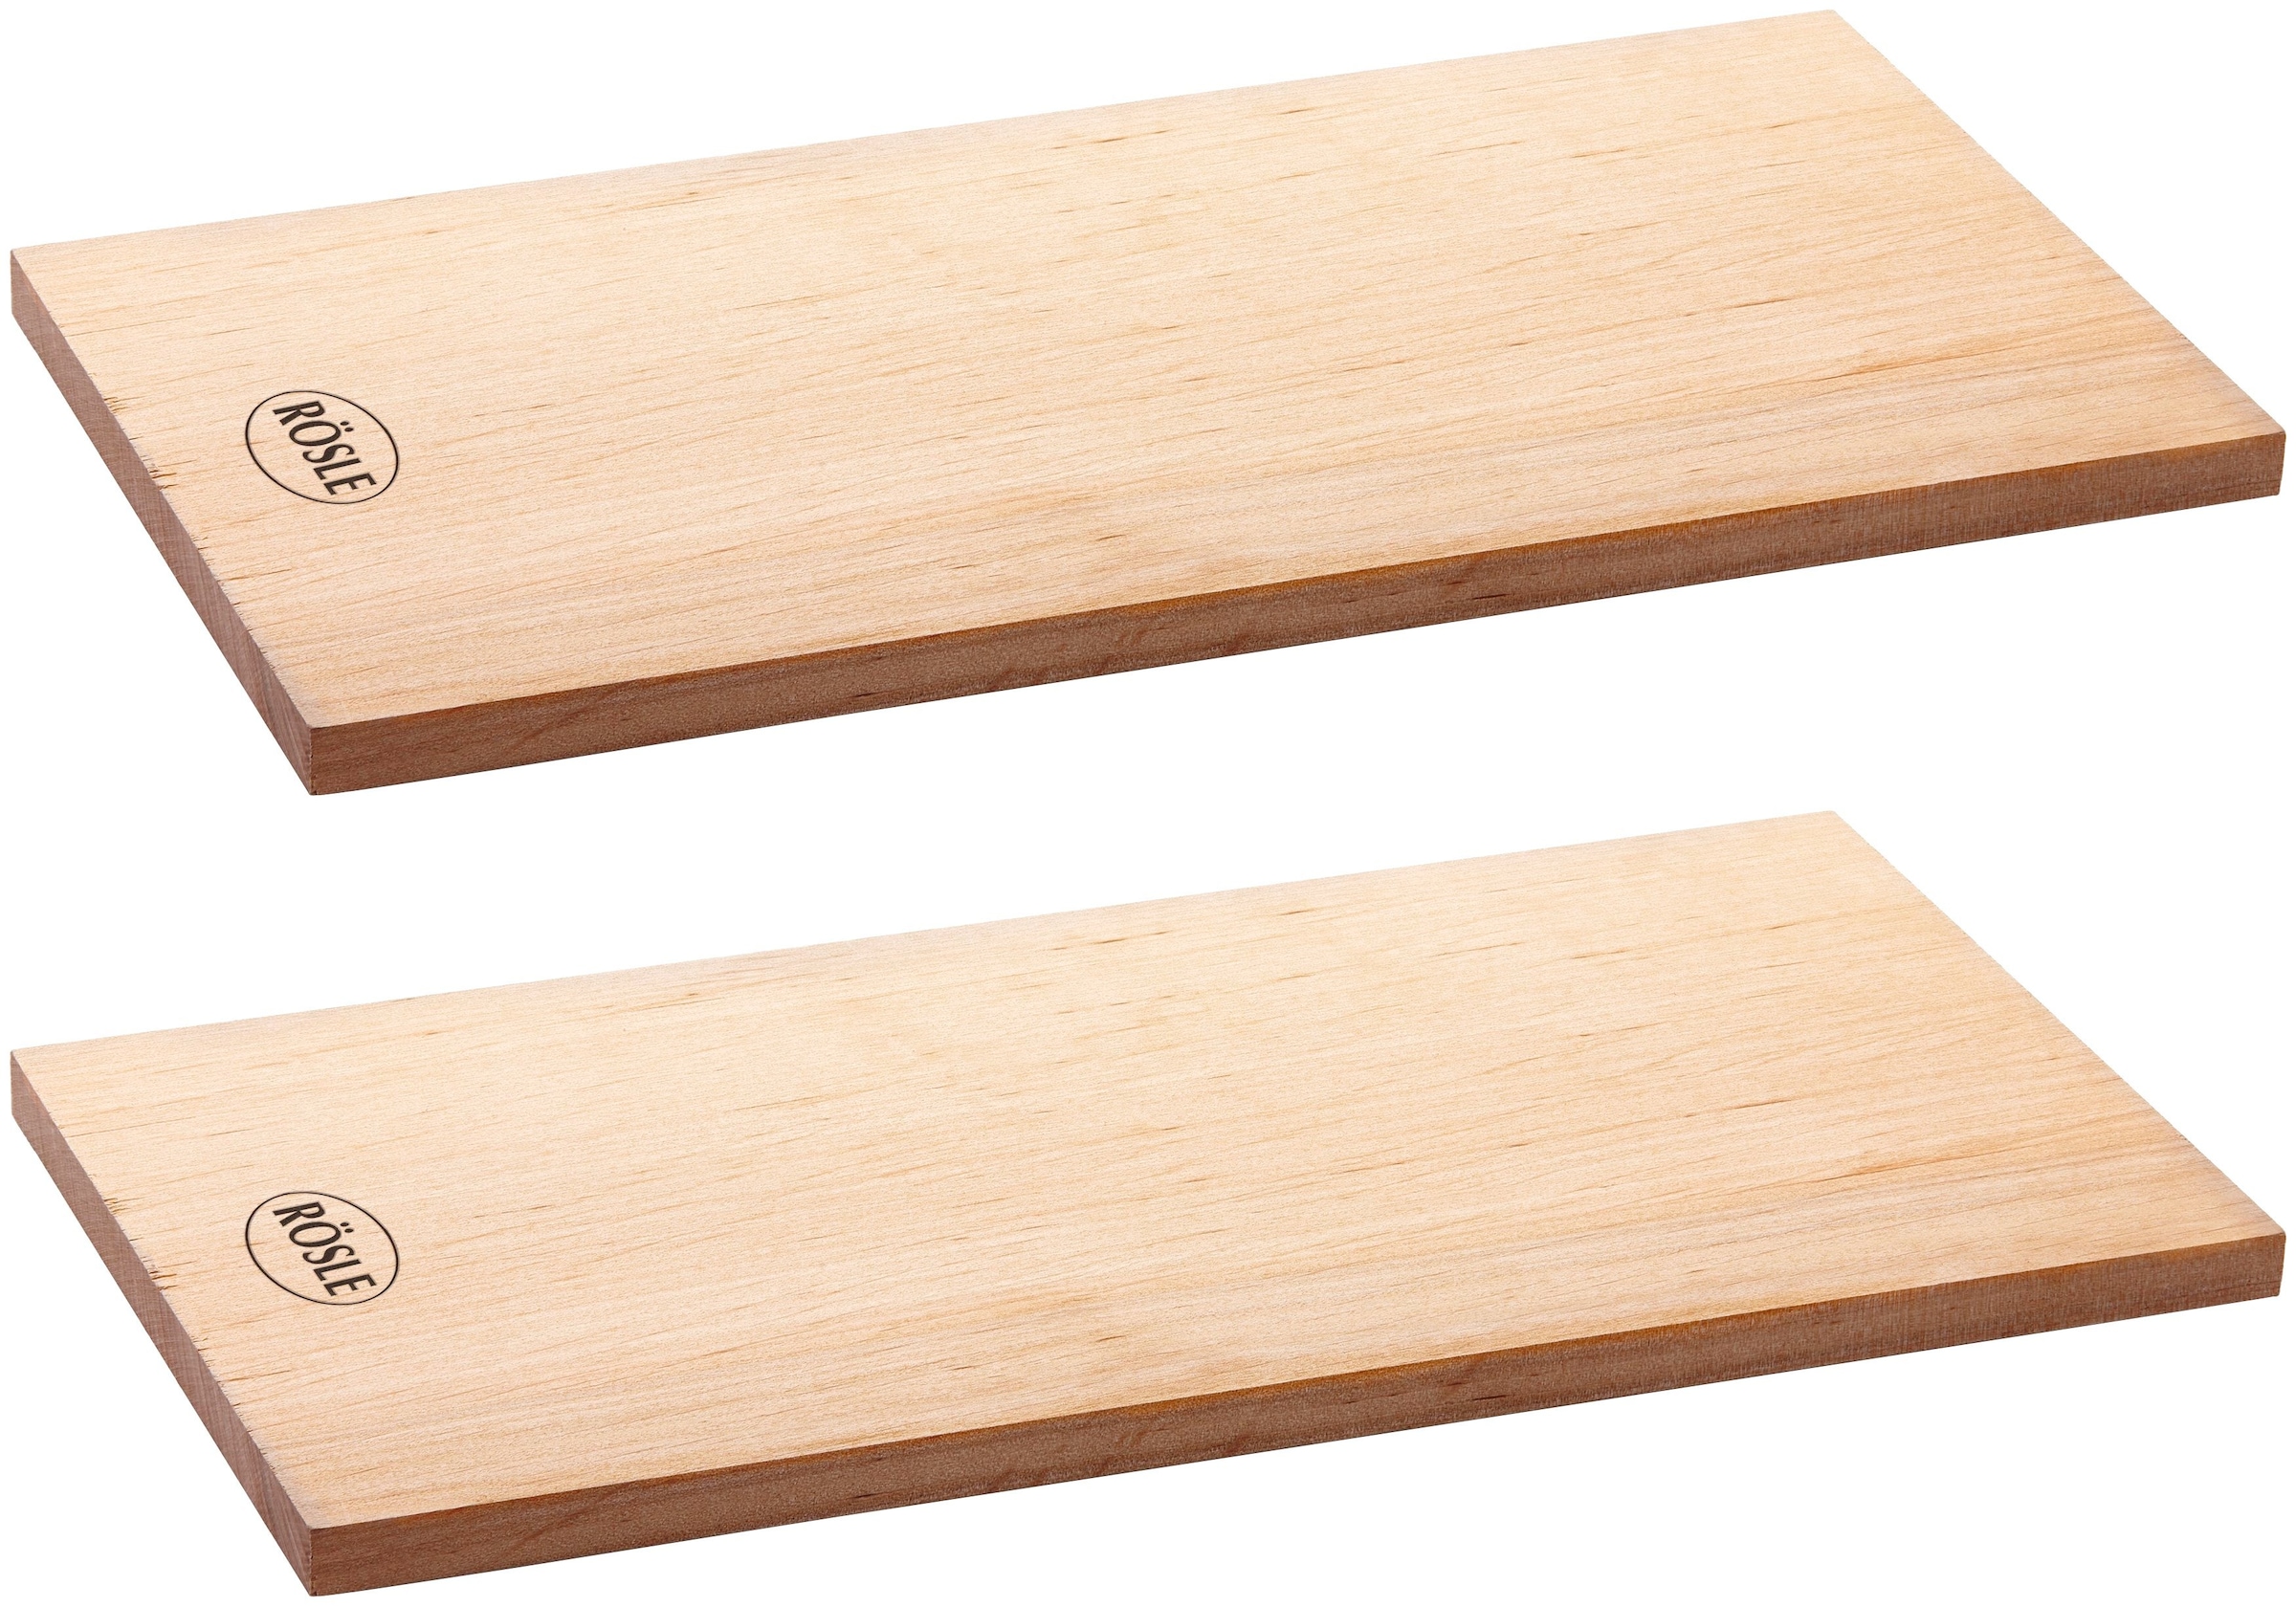 RÖSLE Aromaplanke »Holzplanke Erlenholz, 25174«, Holz, (2 St.), für Holzaroma im Grillgut, mehrfach verwendbar, Naturprodukt